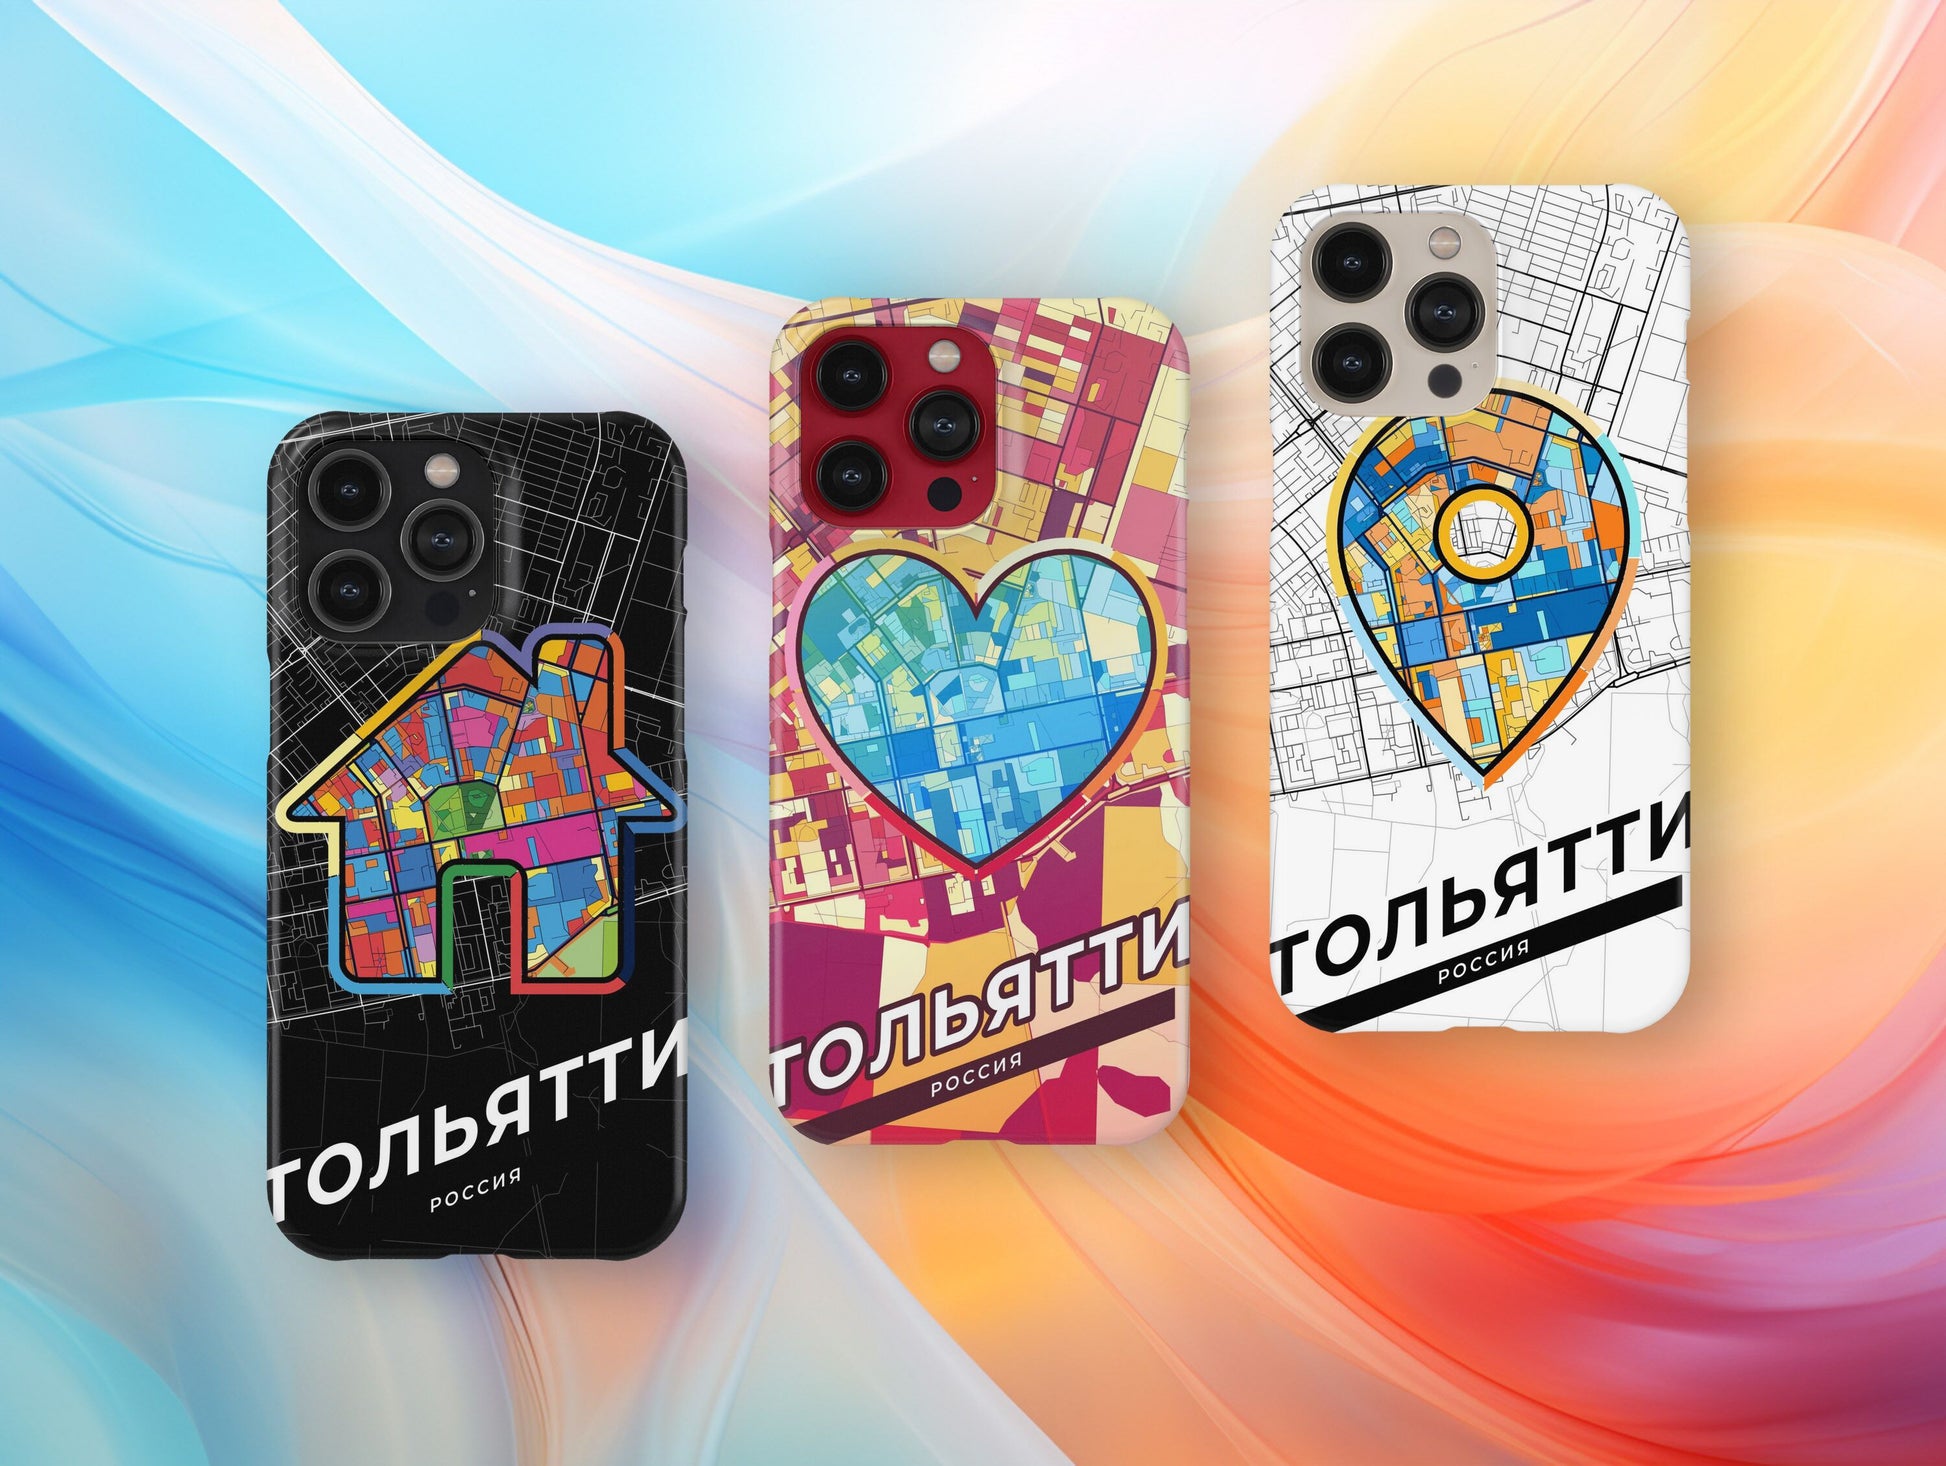 Tolyatti Russia slim phone case with colorful icon